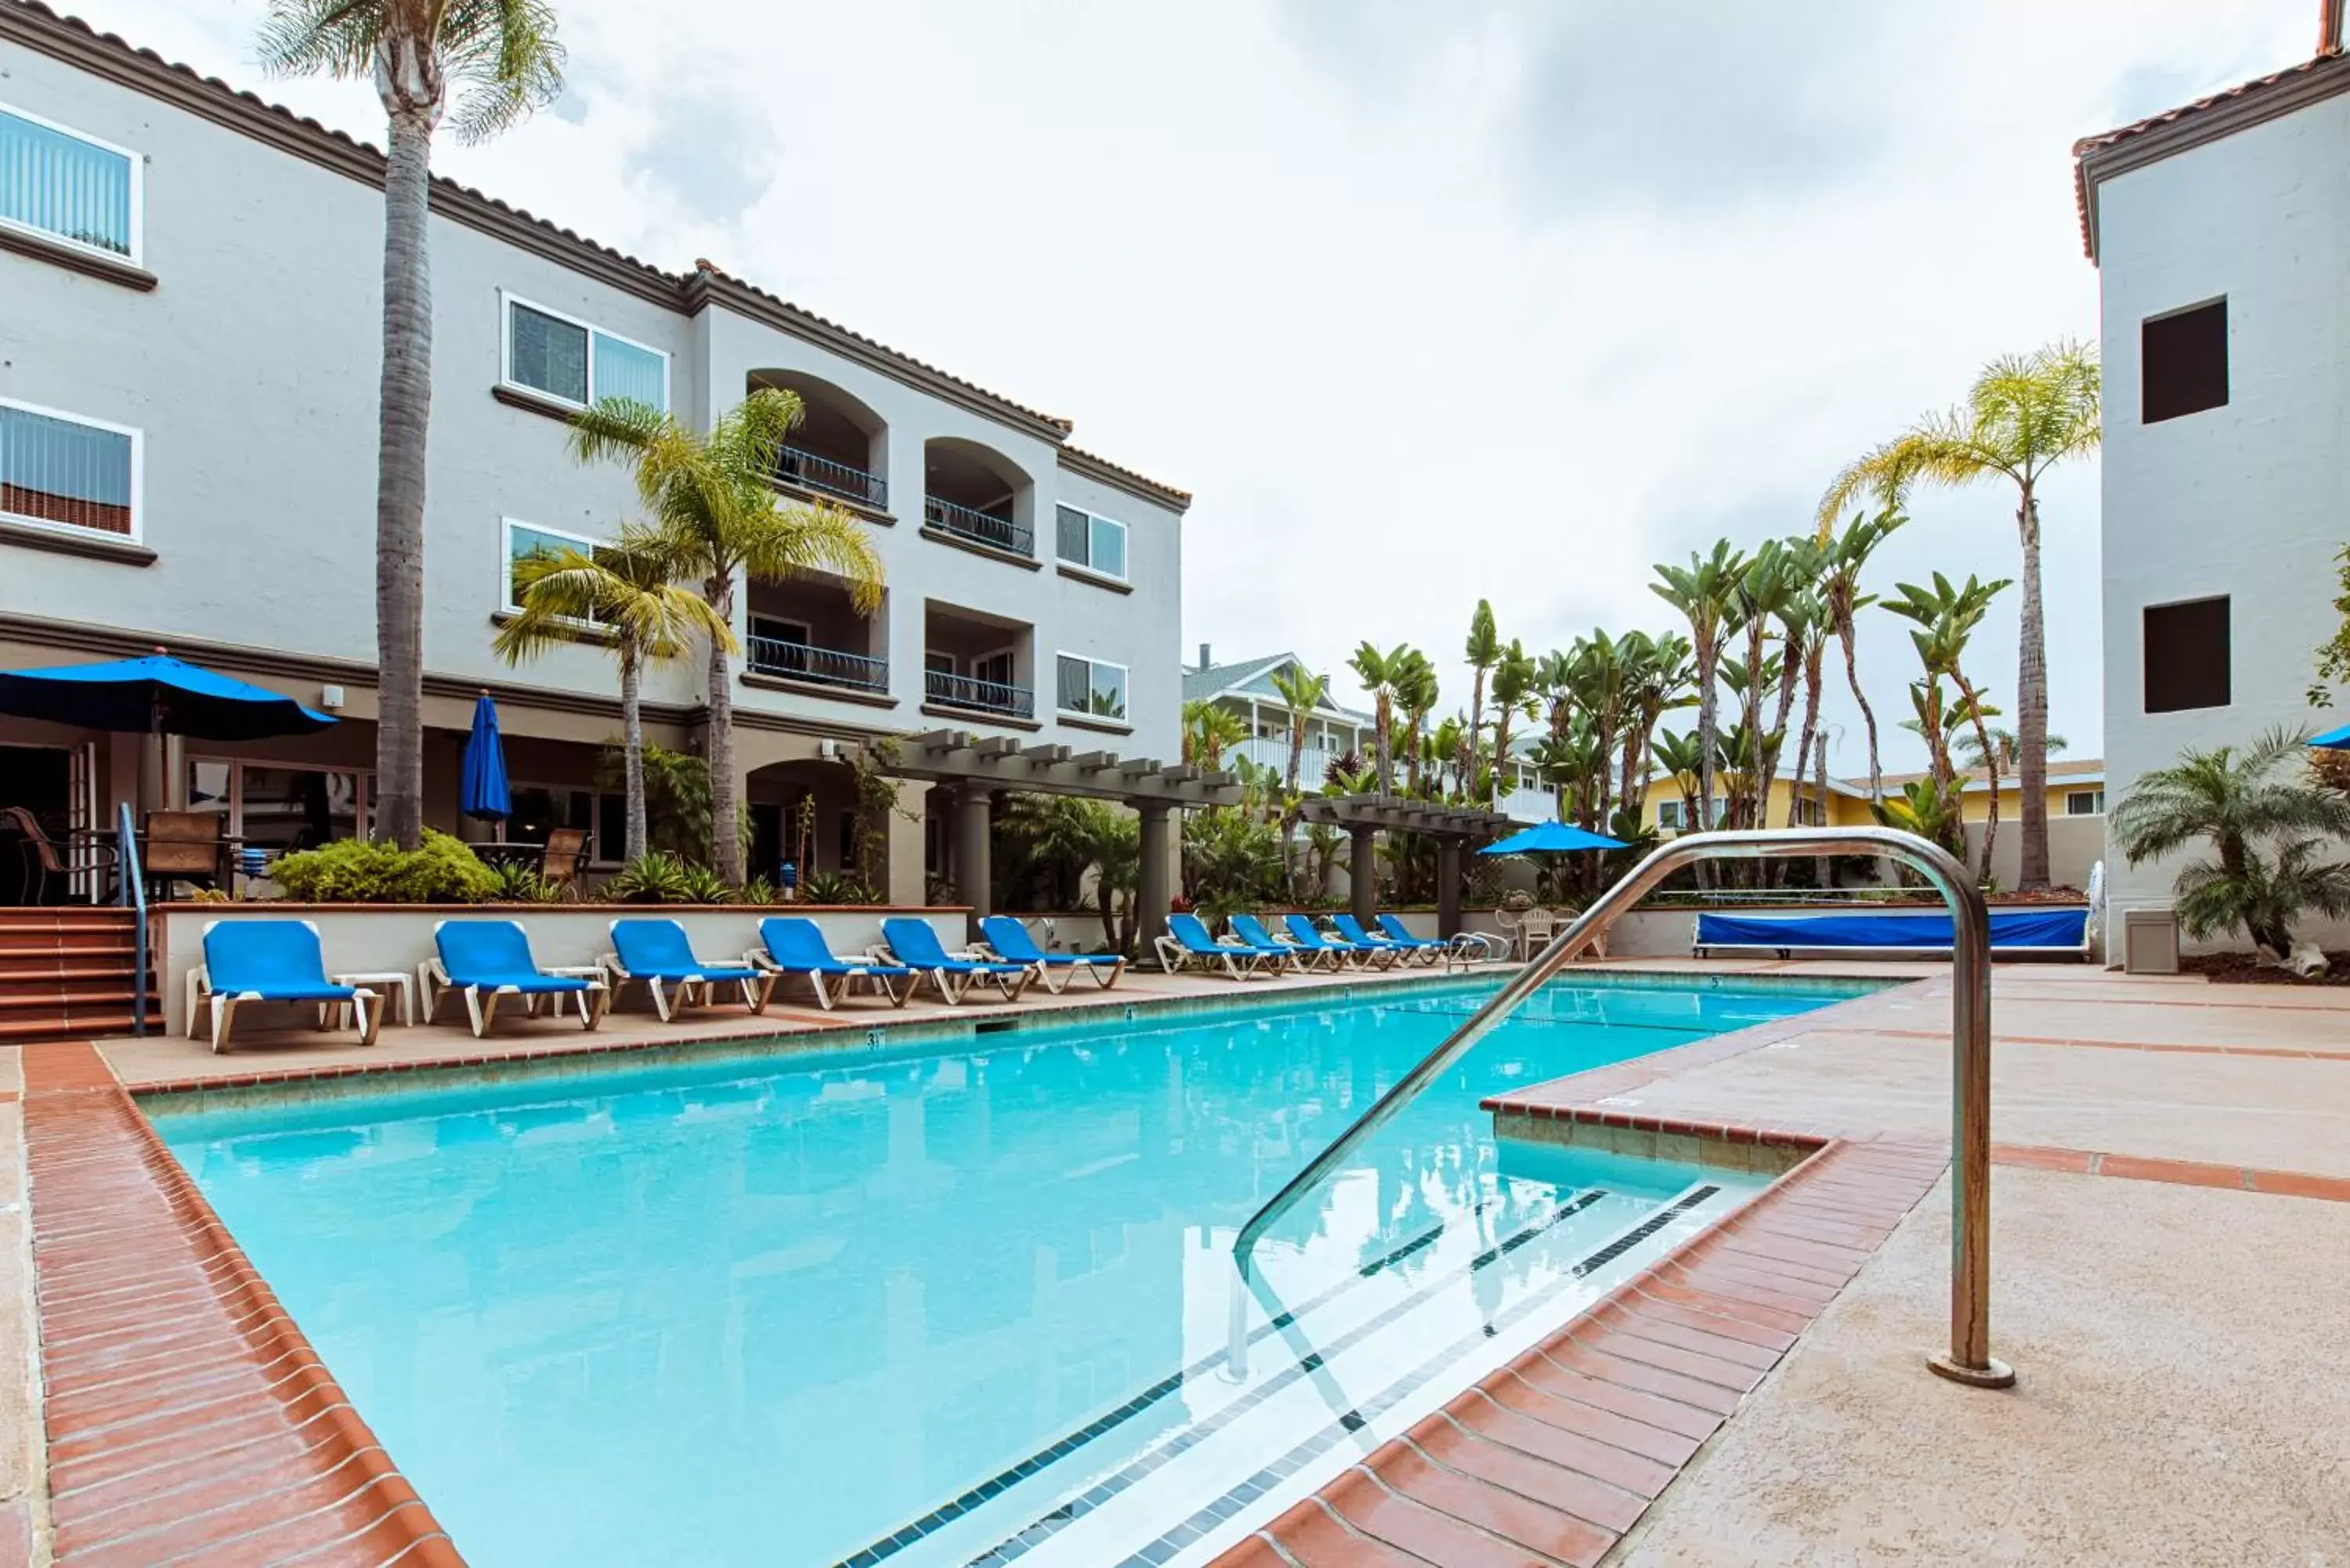 Swimming Pool in Tamarack Beach Hotel